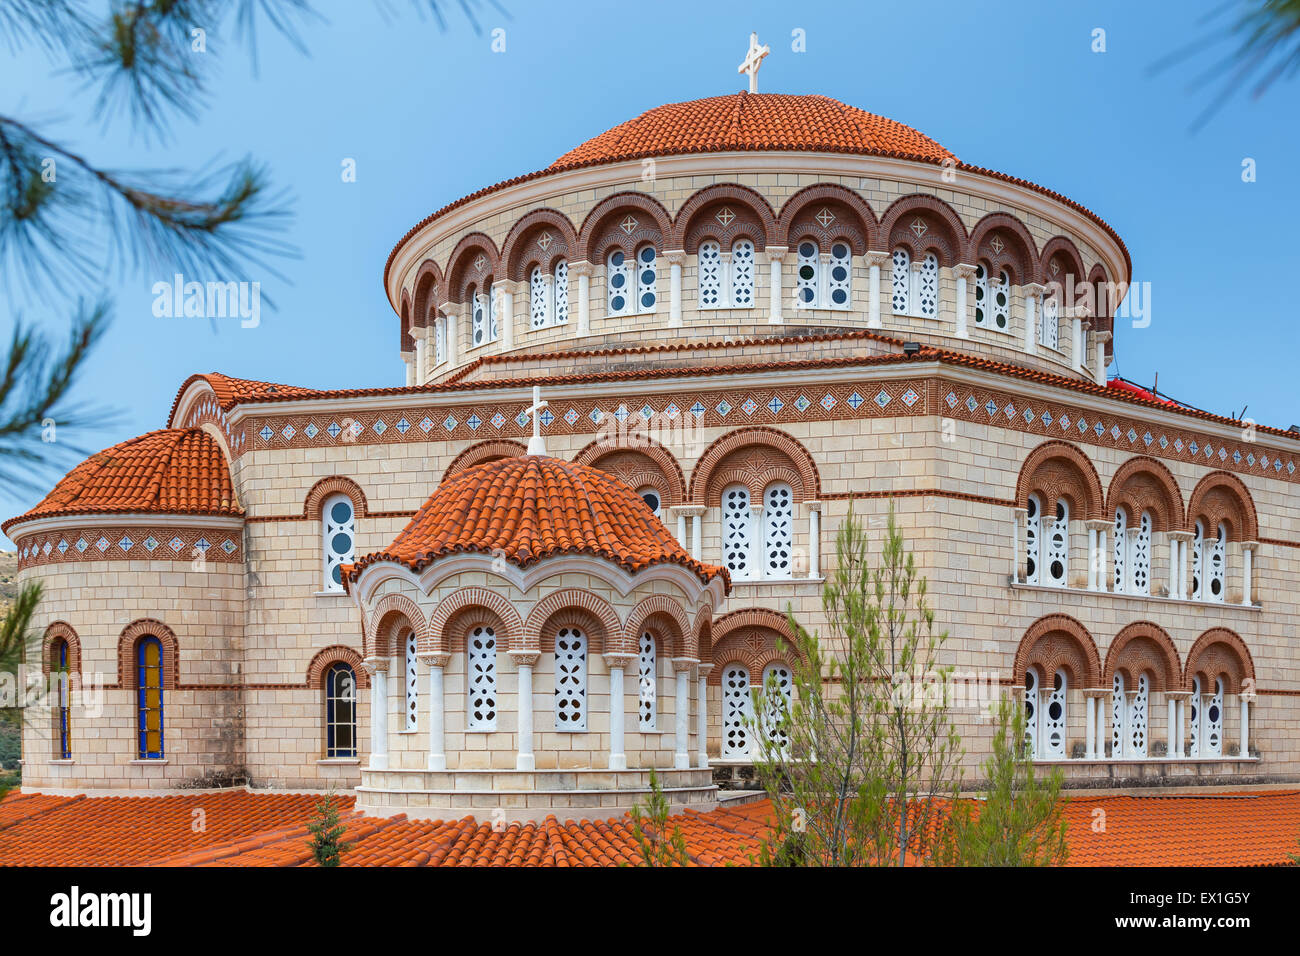 La grande église St Nektarios contre un ciel bleu dans l'île d'Aegina, Grèce Banque D'Images